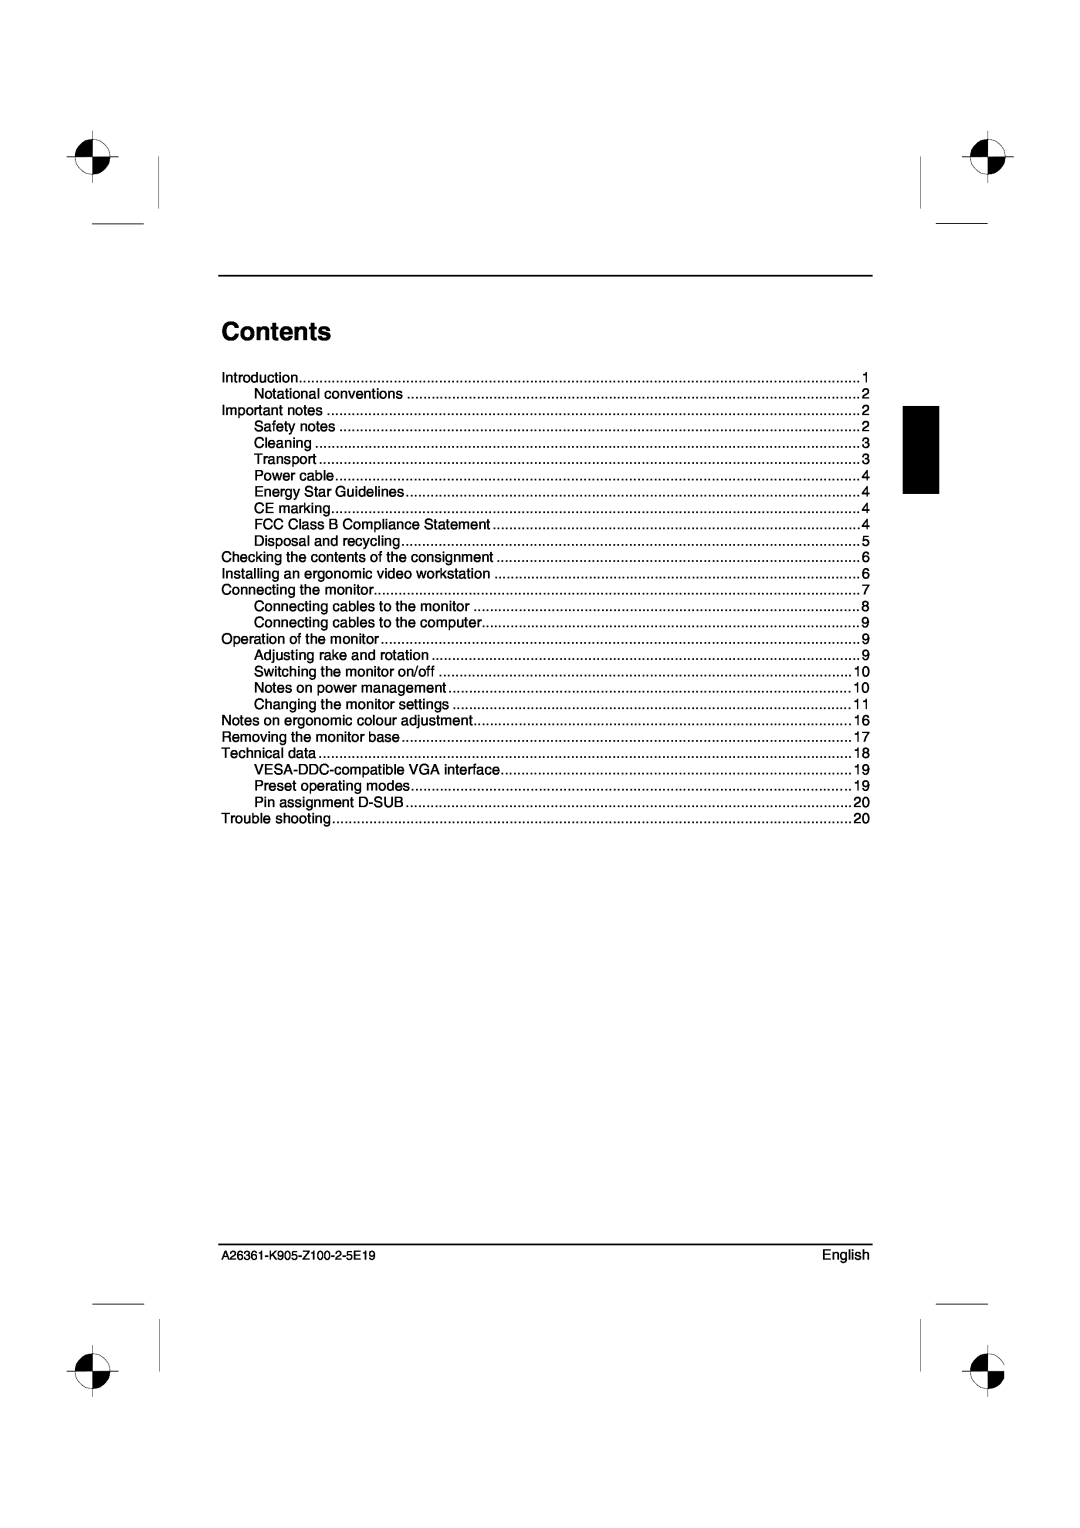 Fujitsu Siemens Computers B15-1 manual Contents 